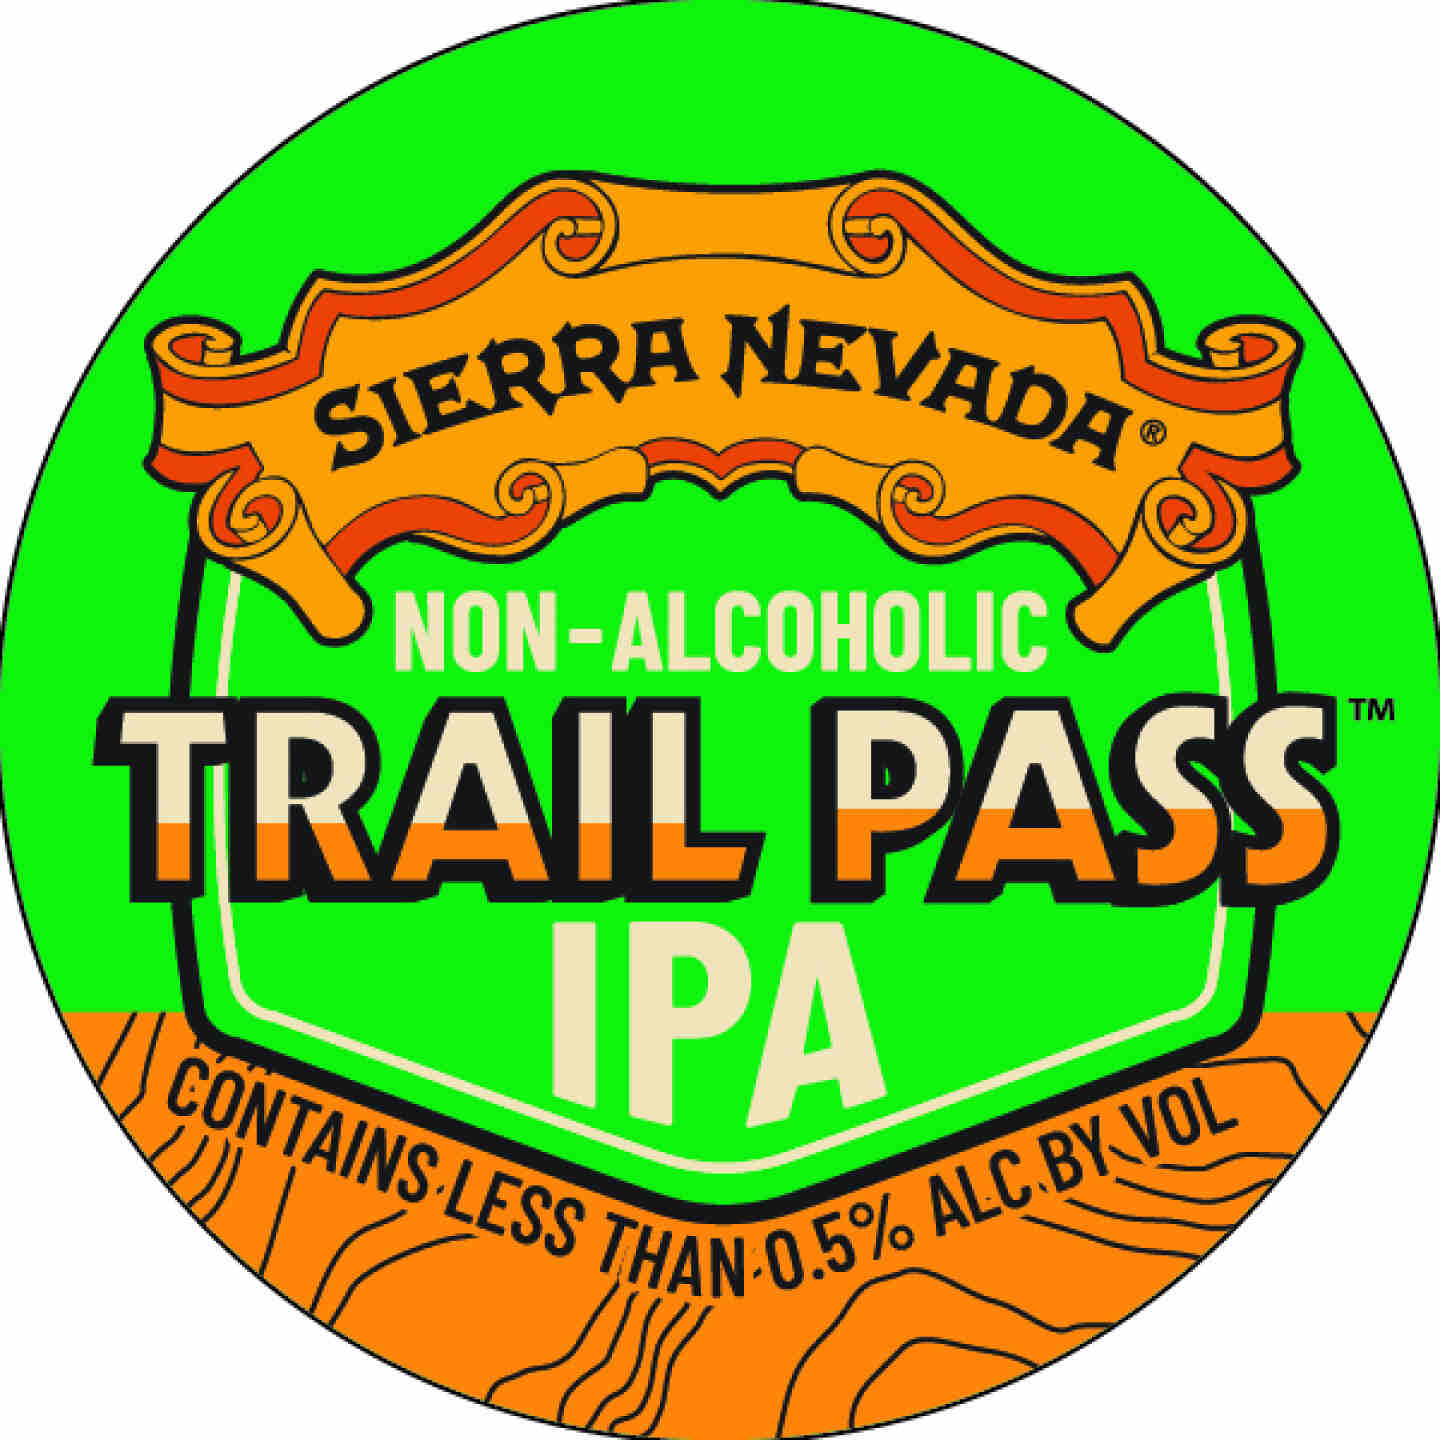 Sierra Nevada Trail Pass Image 3